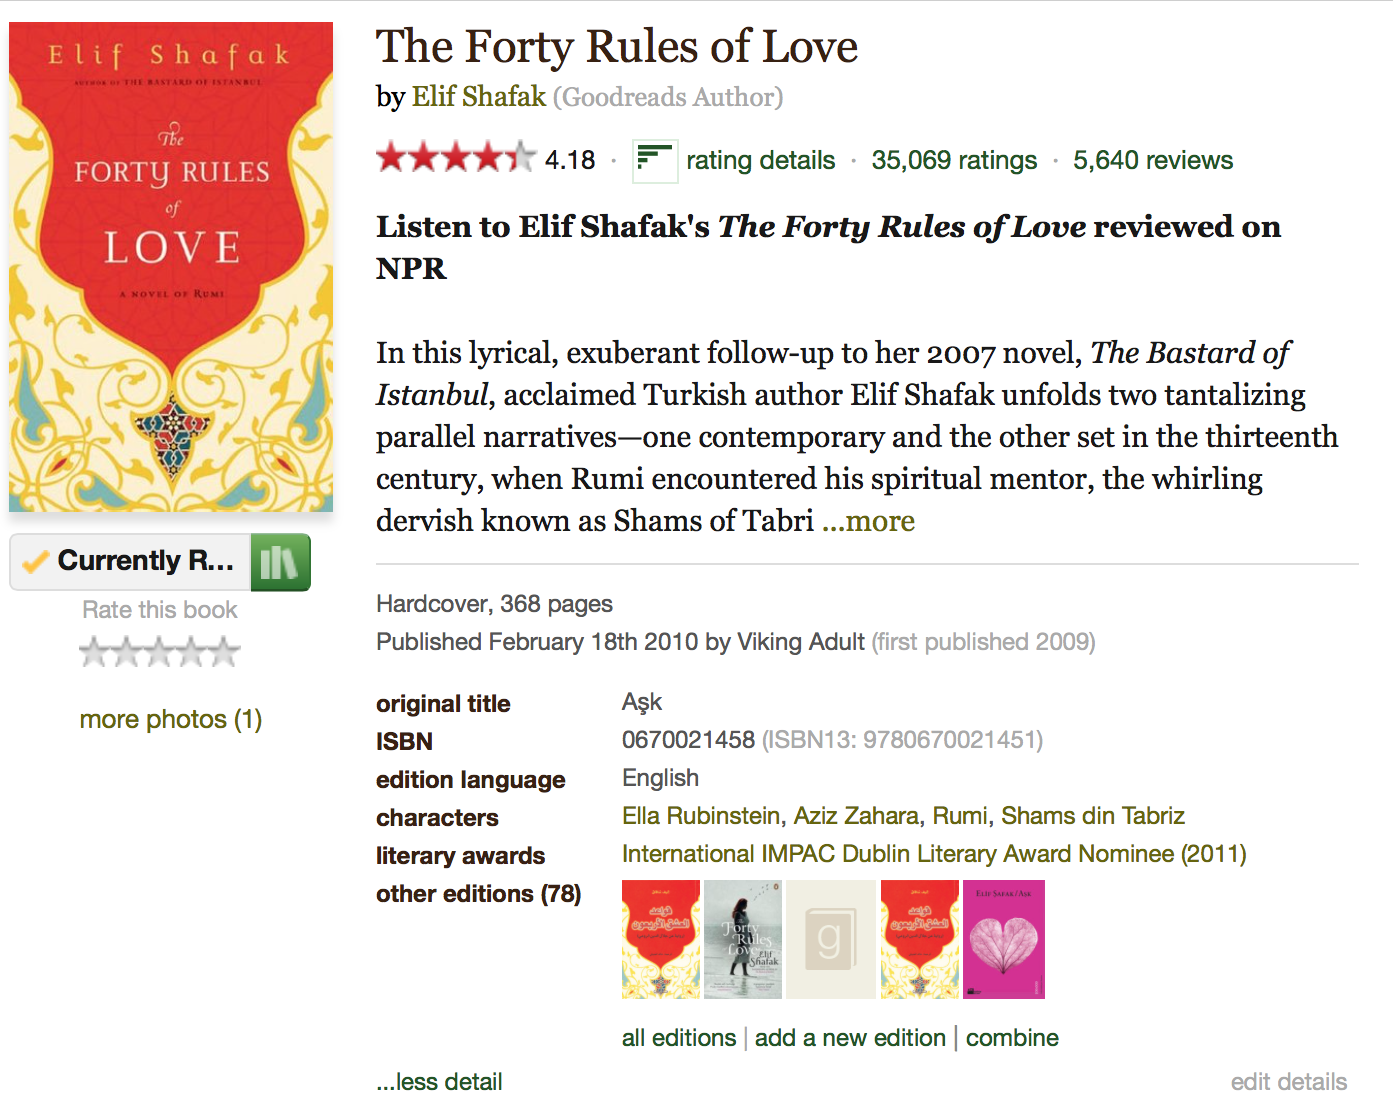 Screen dump of metadata on E. Shafak's book 'forty rules of love'